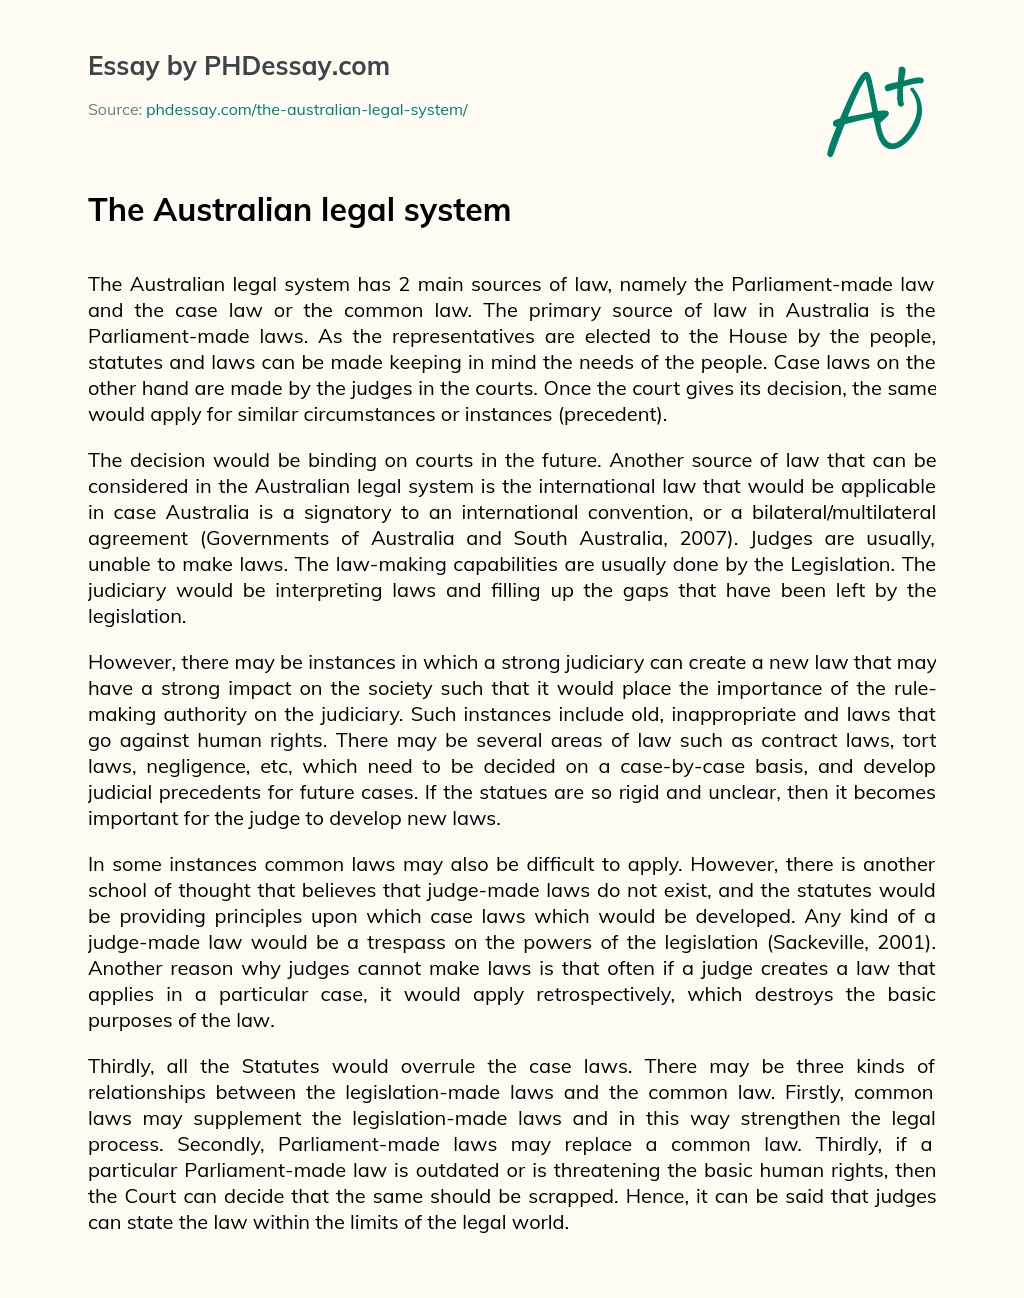 The Australian legal system essay